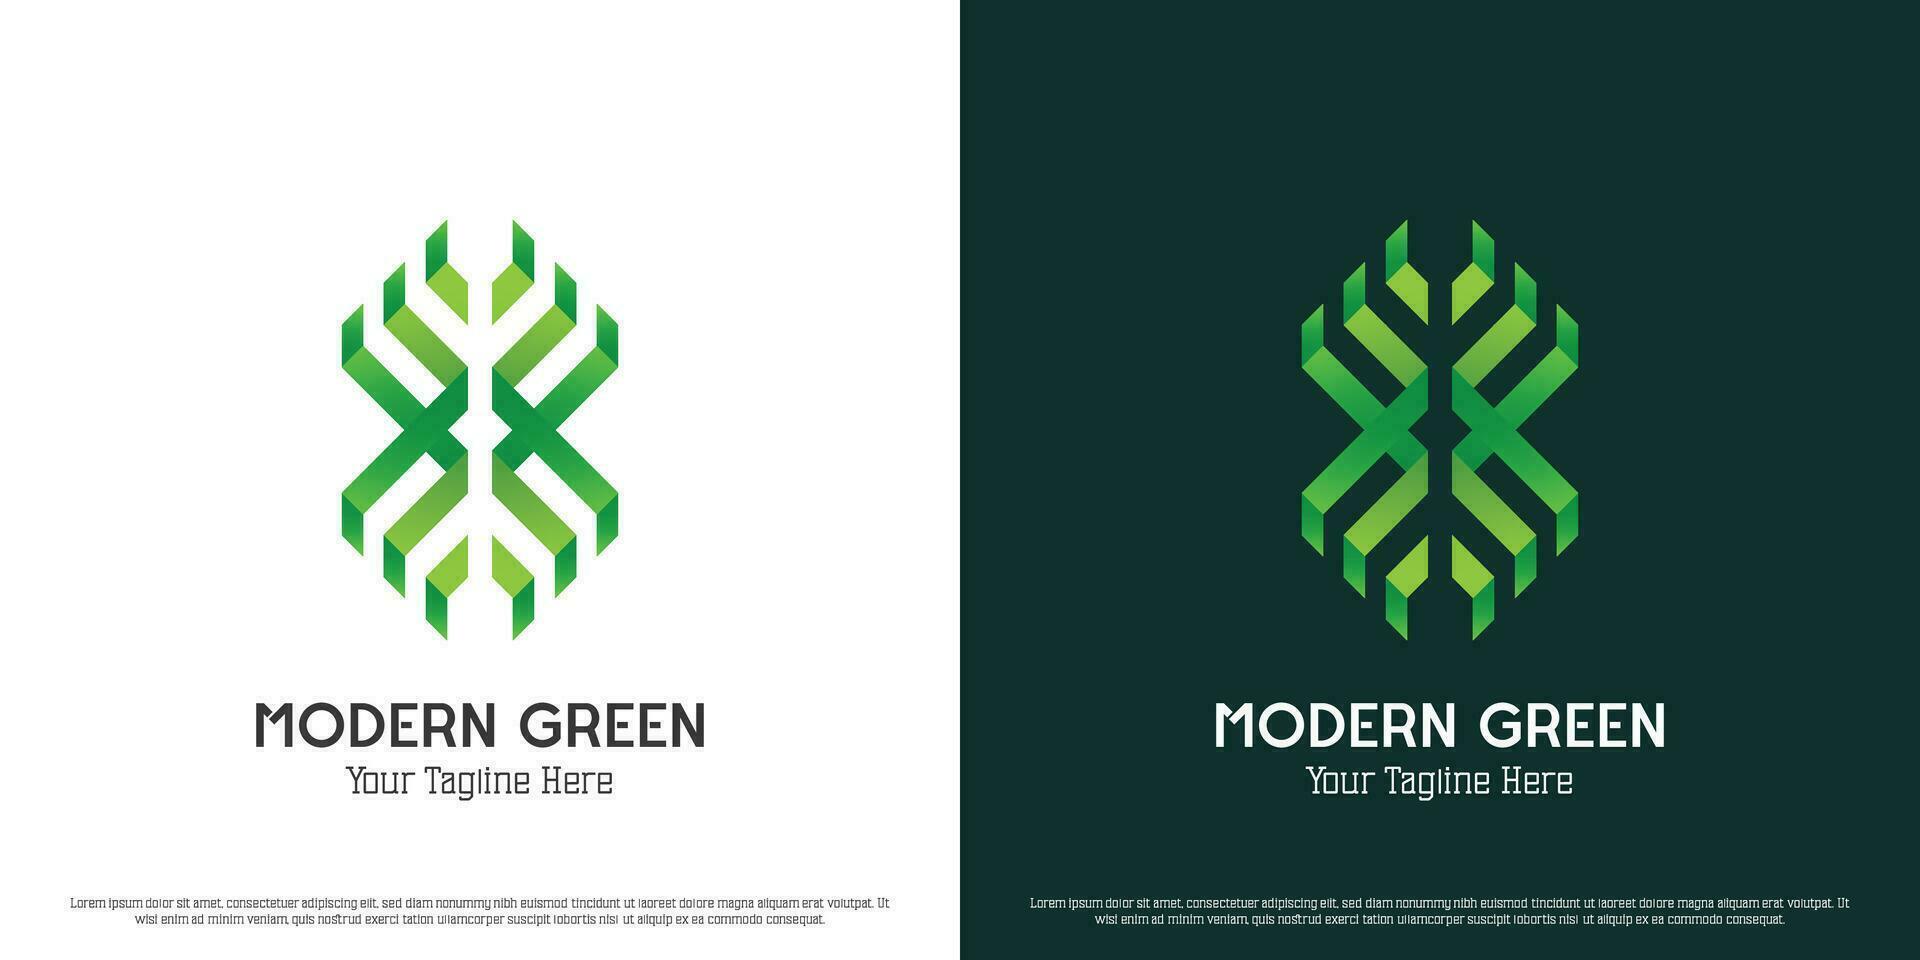 verde resumen logo diseño ilustración. sencillo silueta digital verde naturaleza árbol hoja adn tecnología sistema ecología negocio. casual moderno futurista creativo degradado sencillo icono símbolo. vector